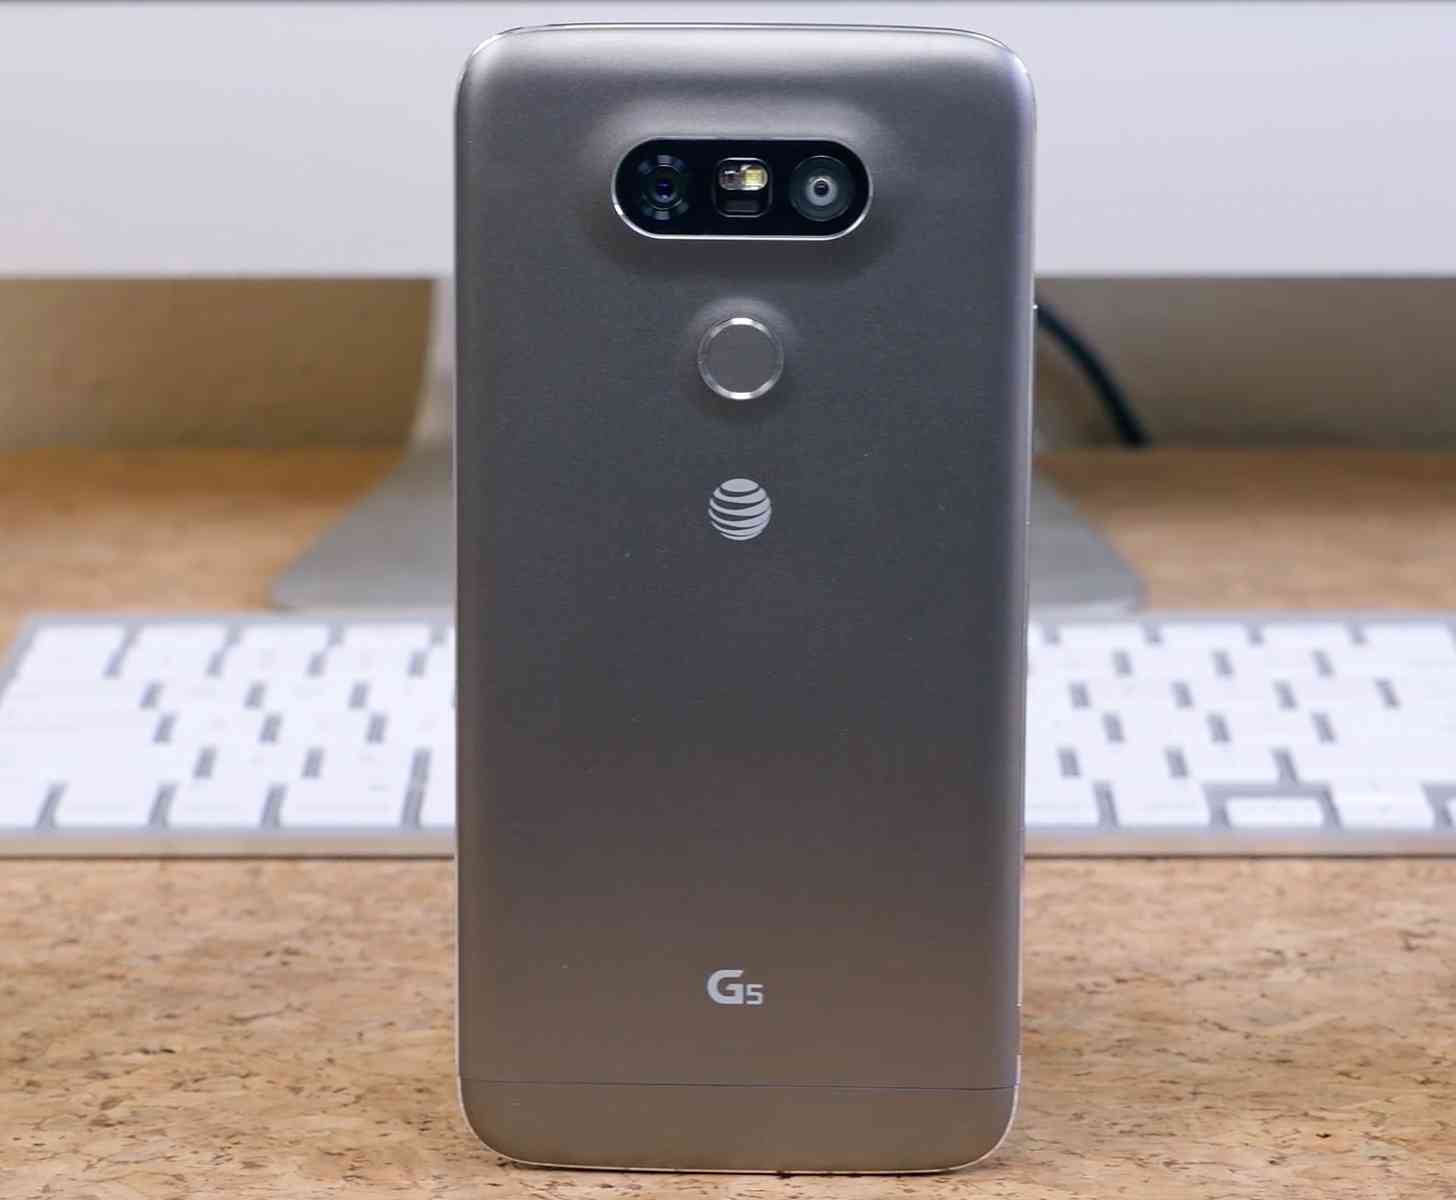 LG G5 hands-on rear